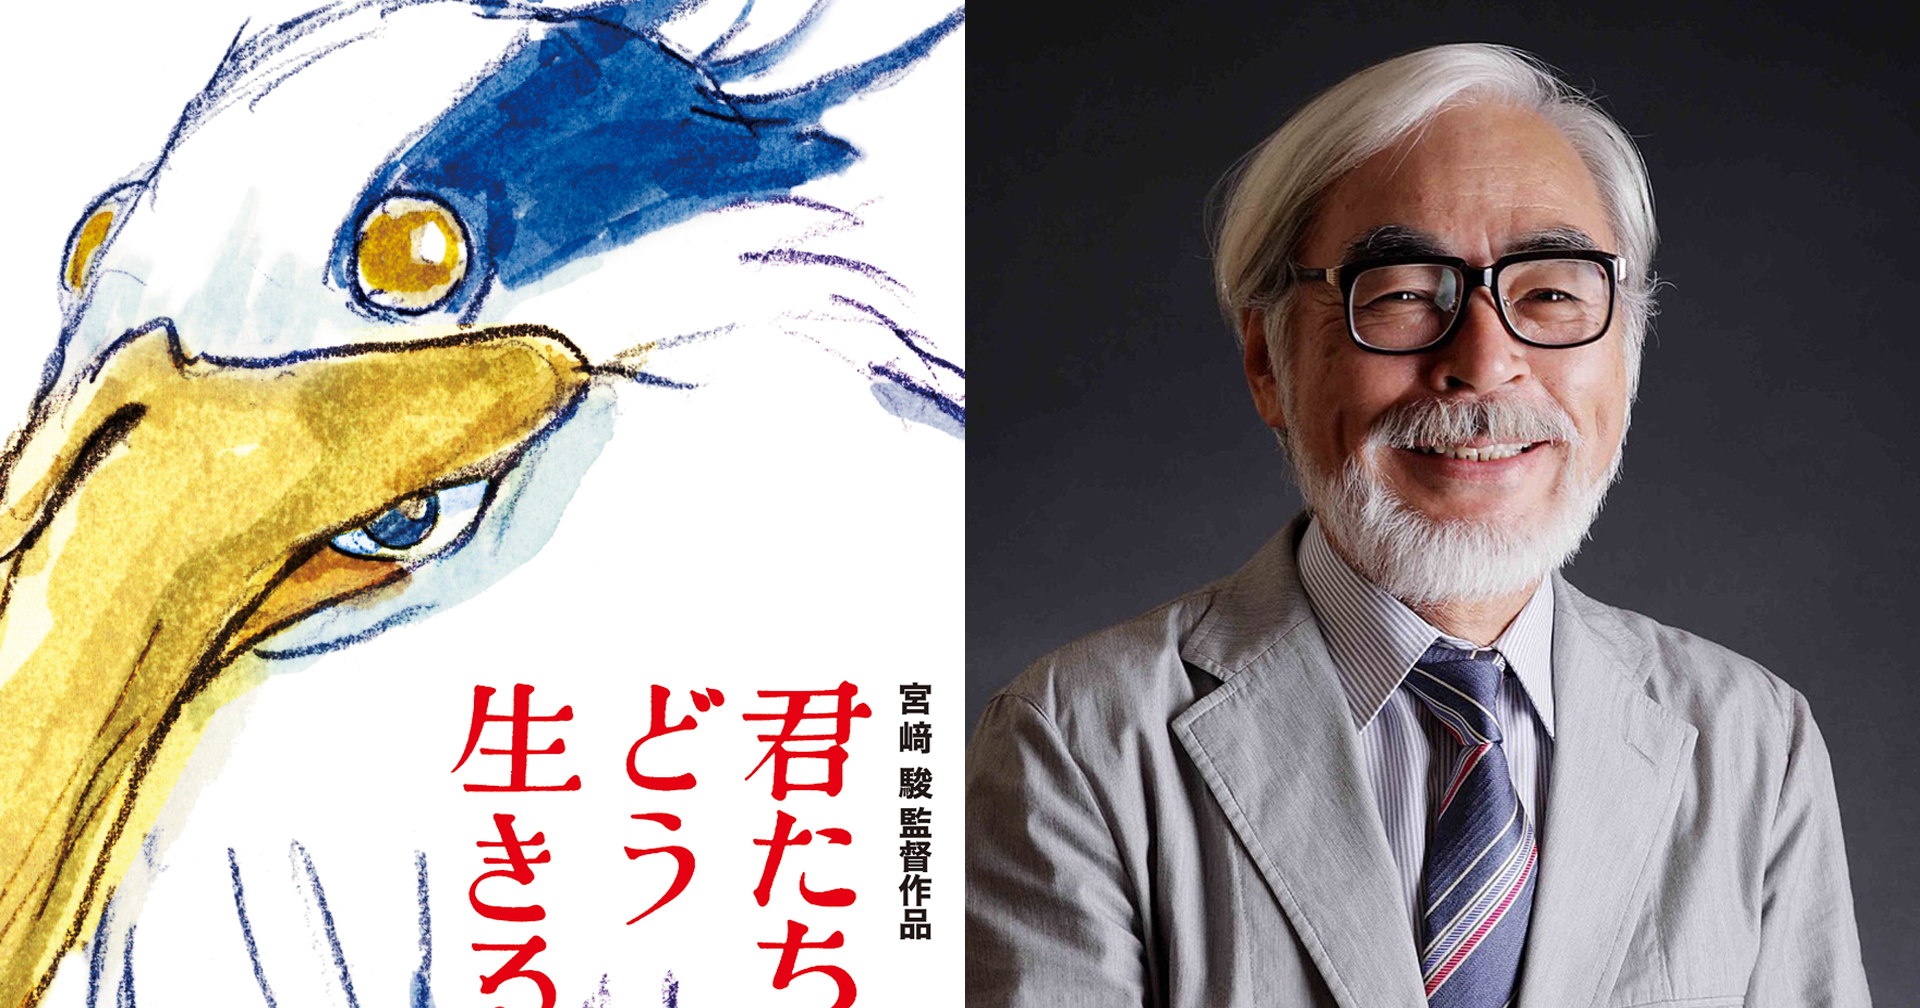 ‘The Boy and the Heron’ ผลงานสุดท้ายของ Hayao Miyazaki แห่ง Ghibli ฉายที่ญี่ปุ่นแล้ว และจะฉายที่สหรัฐฯ ปลายปีนี้